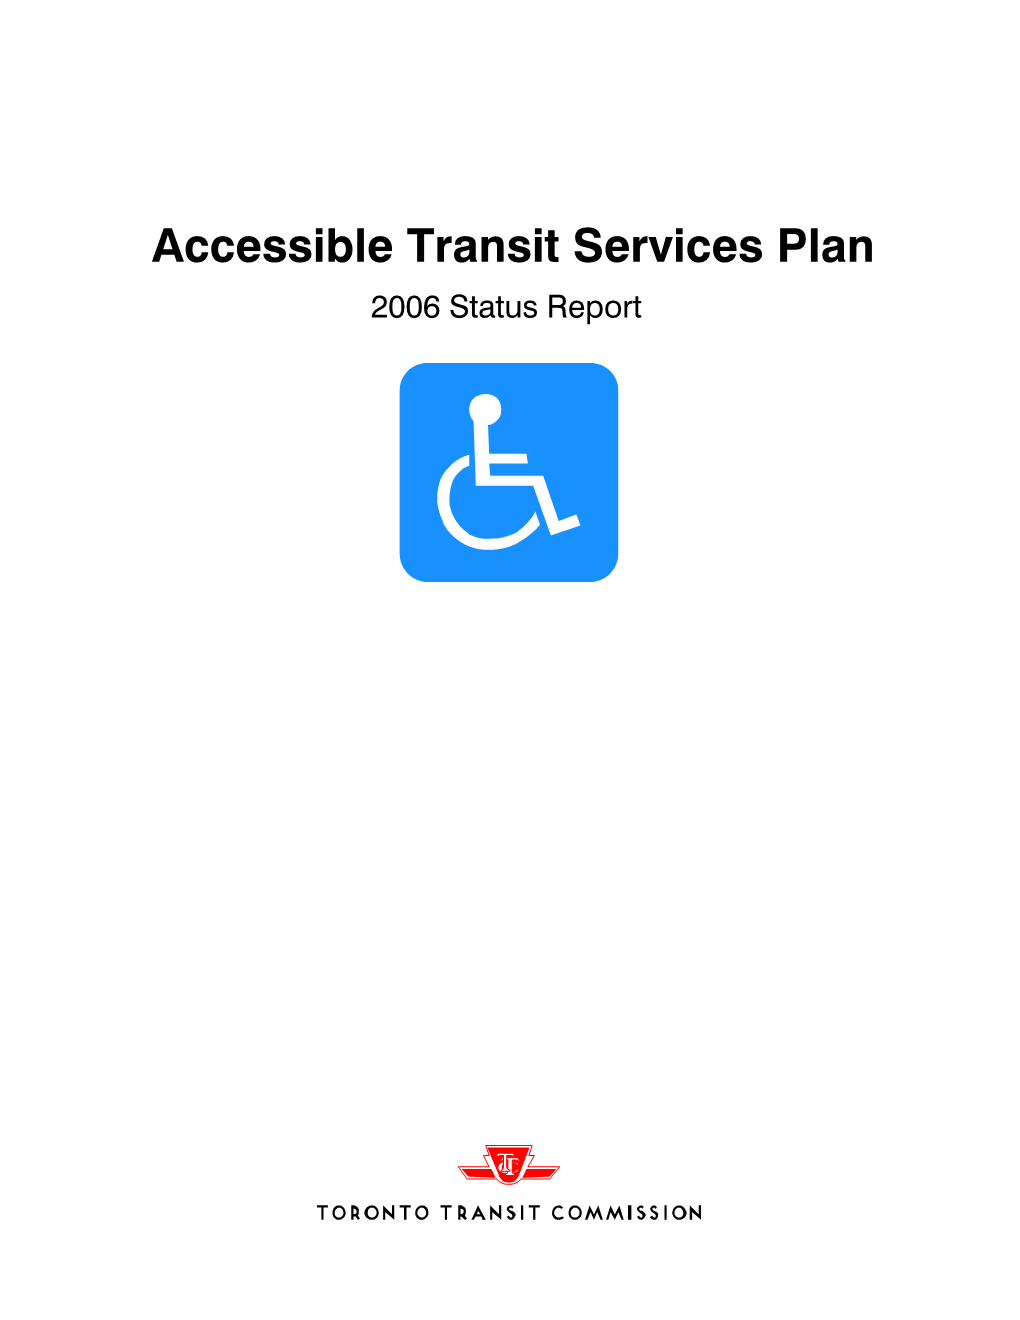 Accessible Transit Service Plan